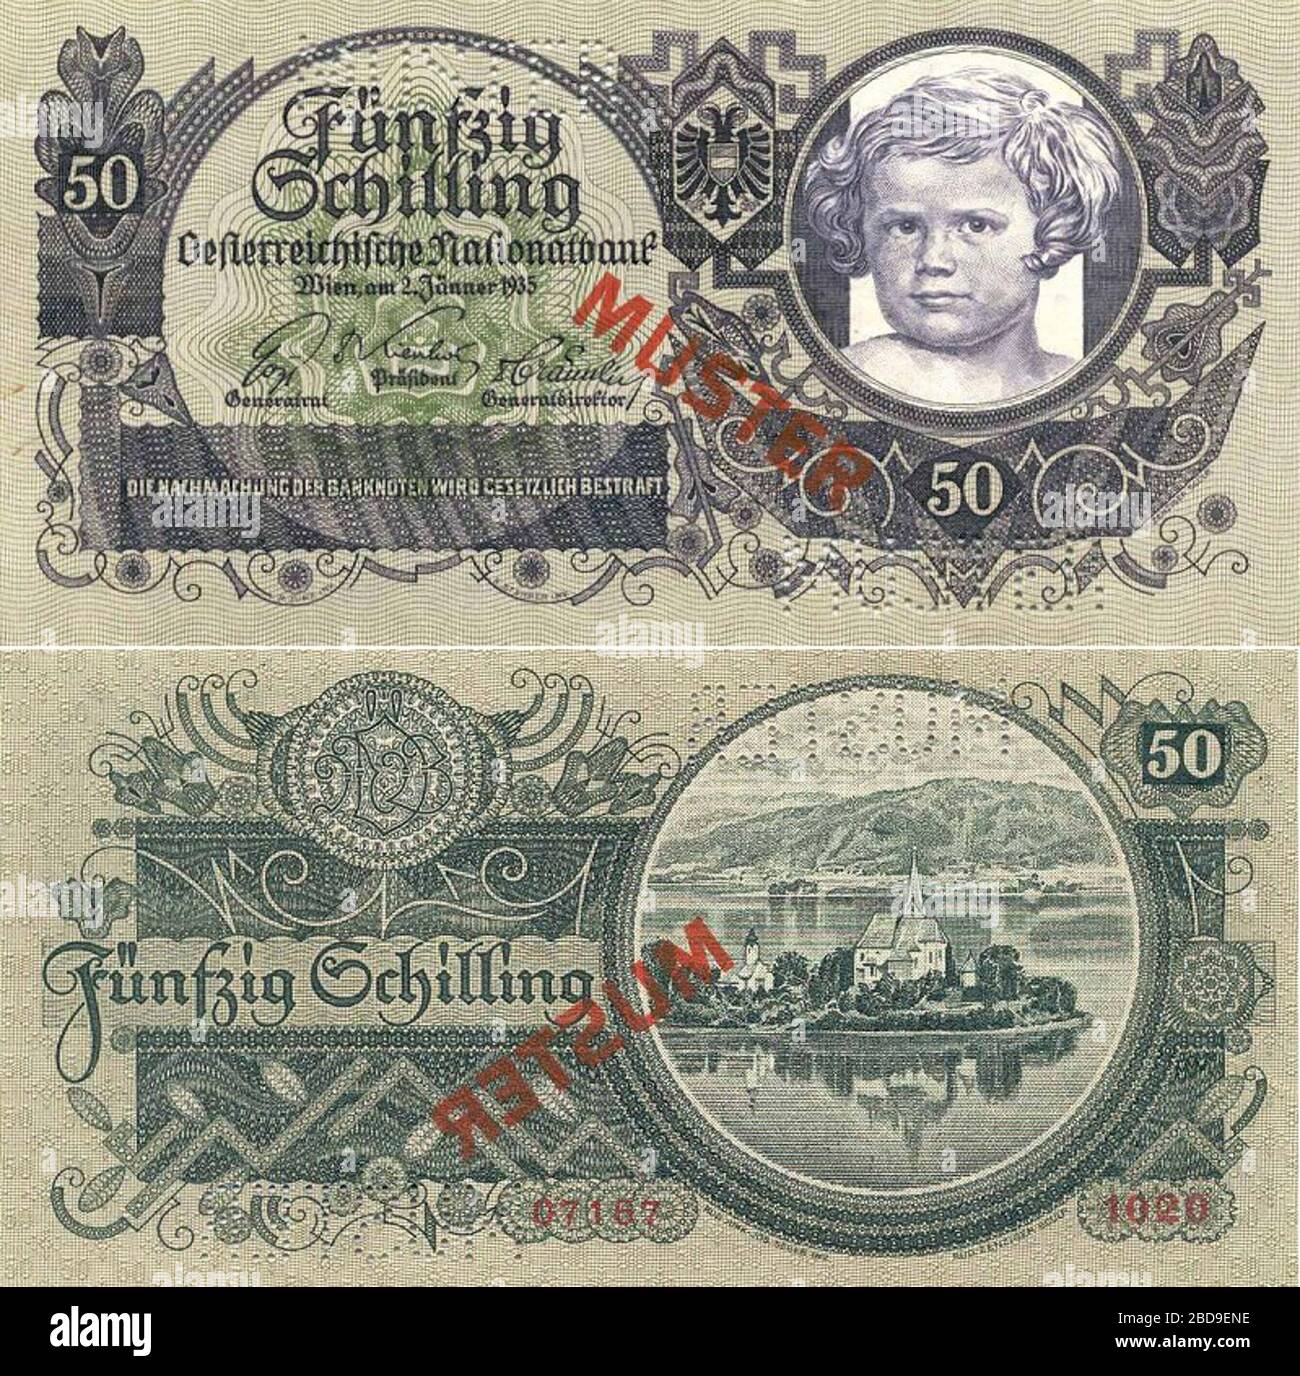 'English: 50 Schilling banknote first issued 8.6.1936 Deutsch: 50 Schilling; 2 January 1935; http://www.banknoteworld.com/countries/austria2.html; Österreichische Nationalbank; ' Stock Photo